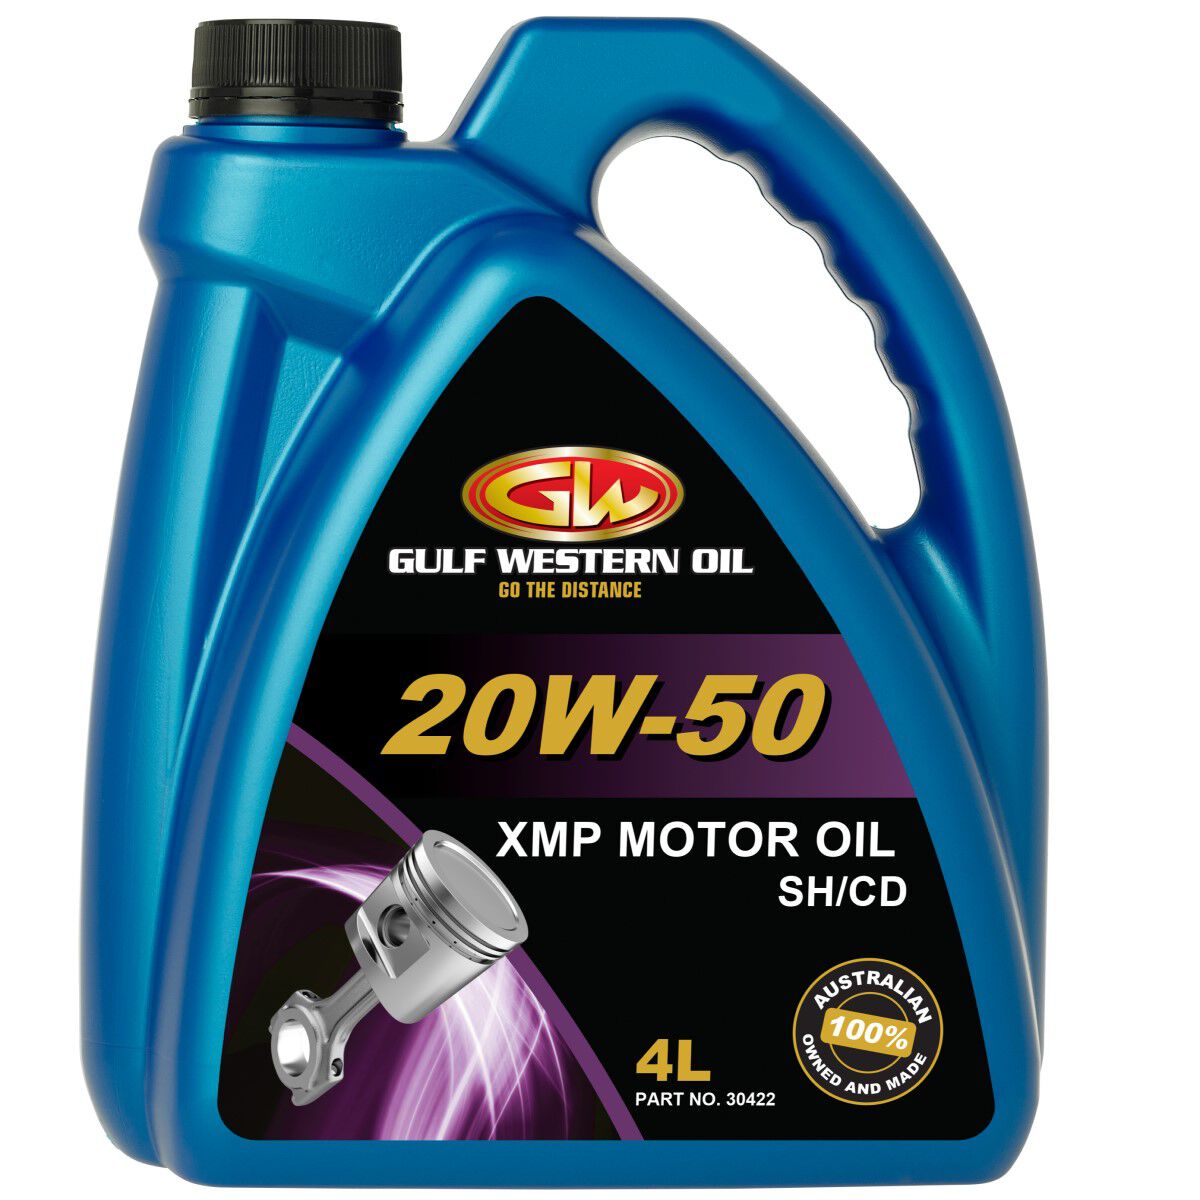 Gulf Western Xmp Engine Oil 20W-50 Sh/Cd 4L - 30422 | Supercheap Auto